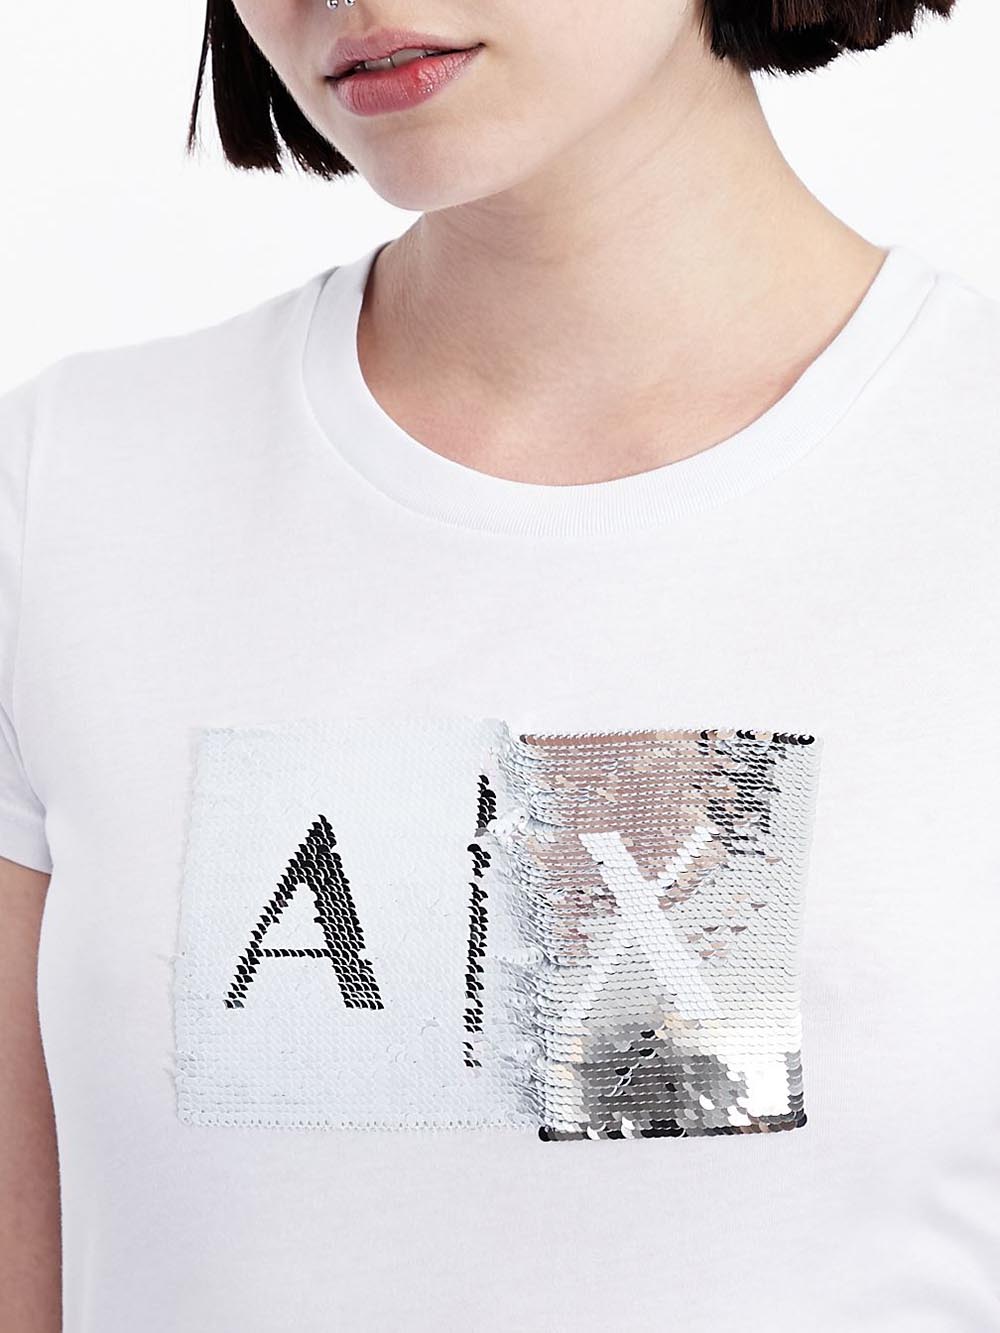 Armani Exchange T-shirt Donna 8nytdl Yj73z Bianco/silver